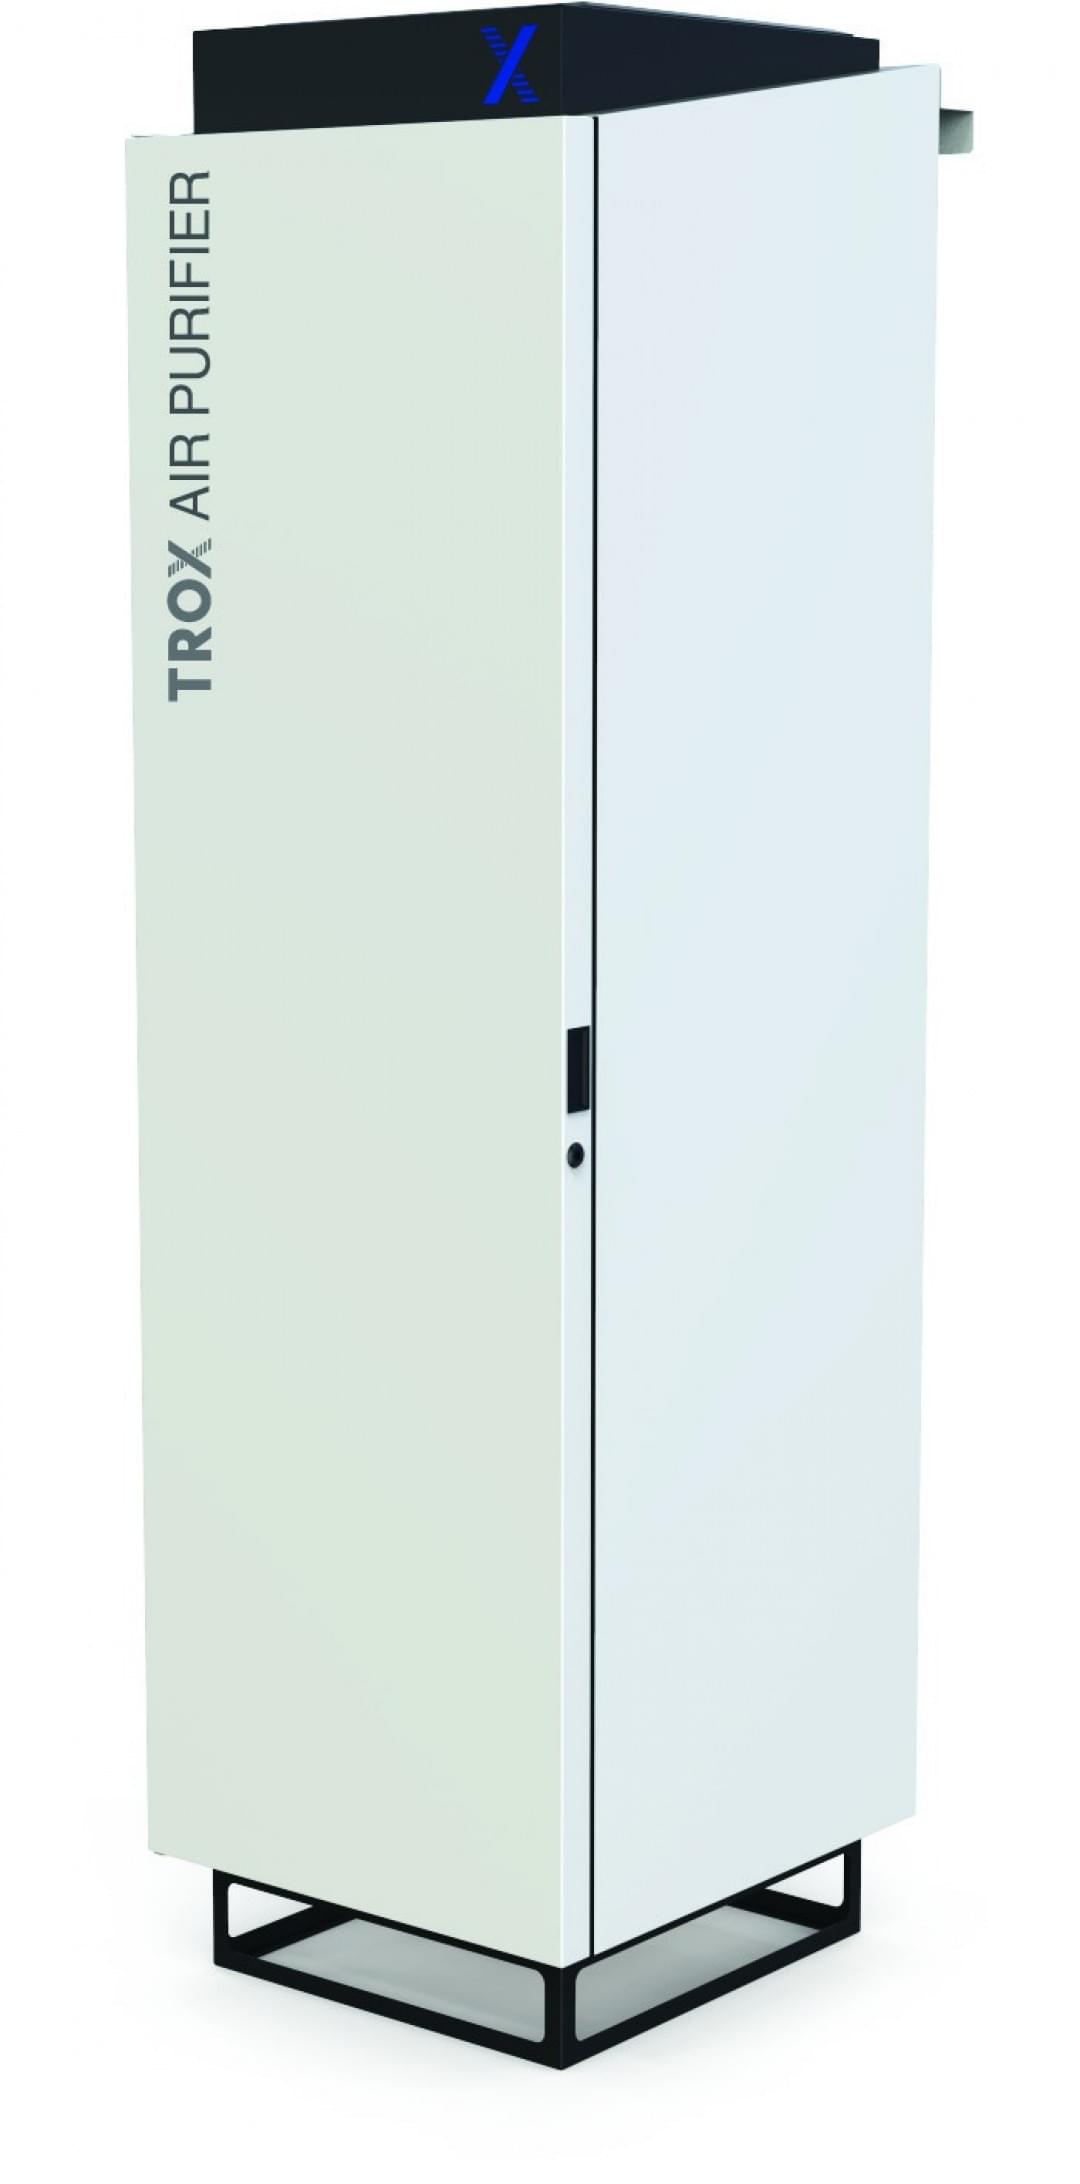 TROX Air Purifier from TROX